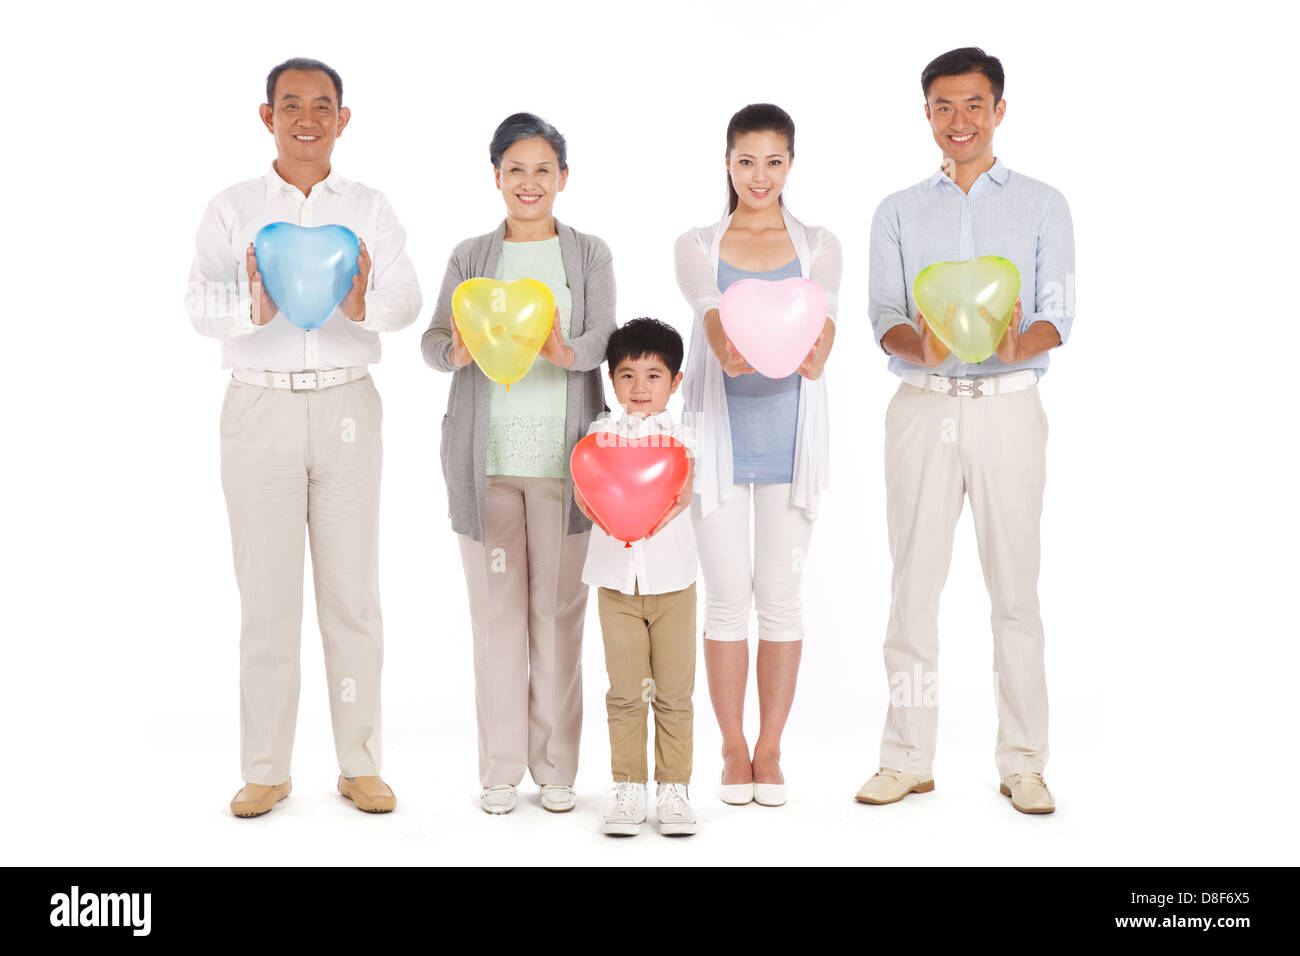 Toute la famille holding heart-shaped balloon Banque D'Images